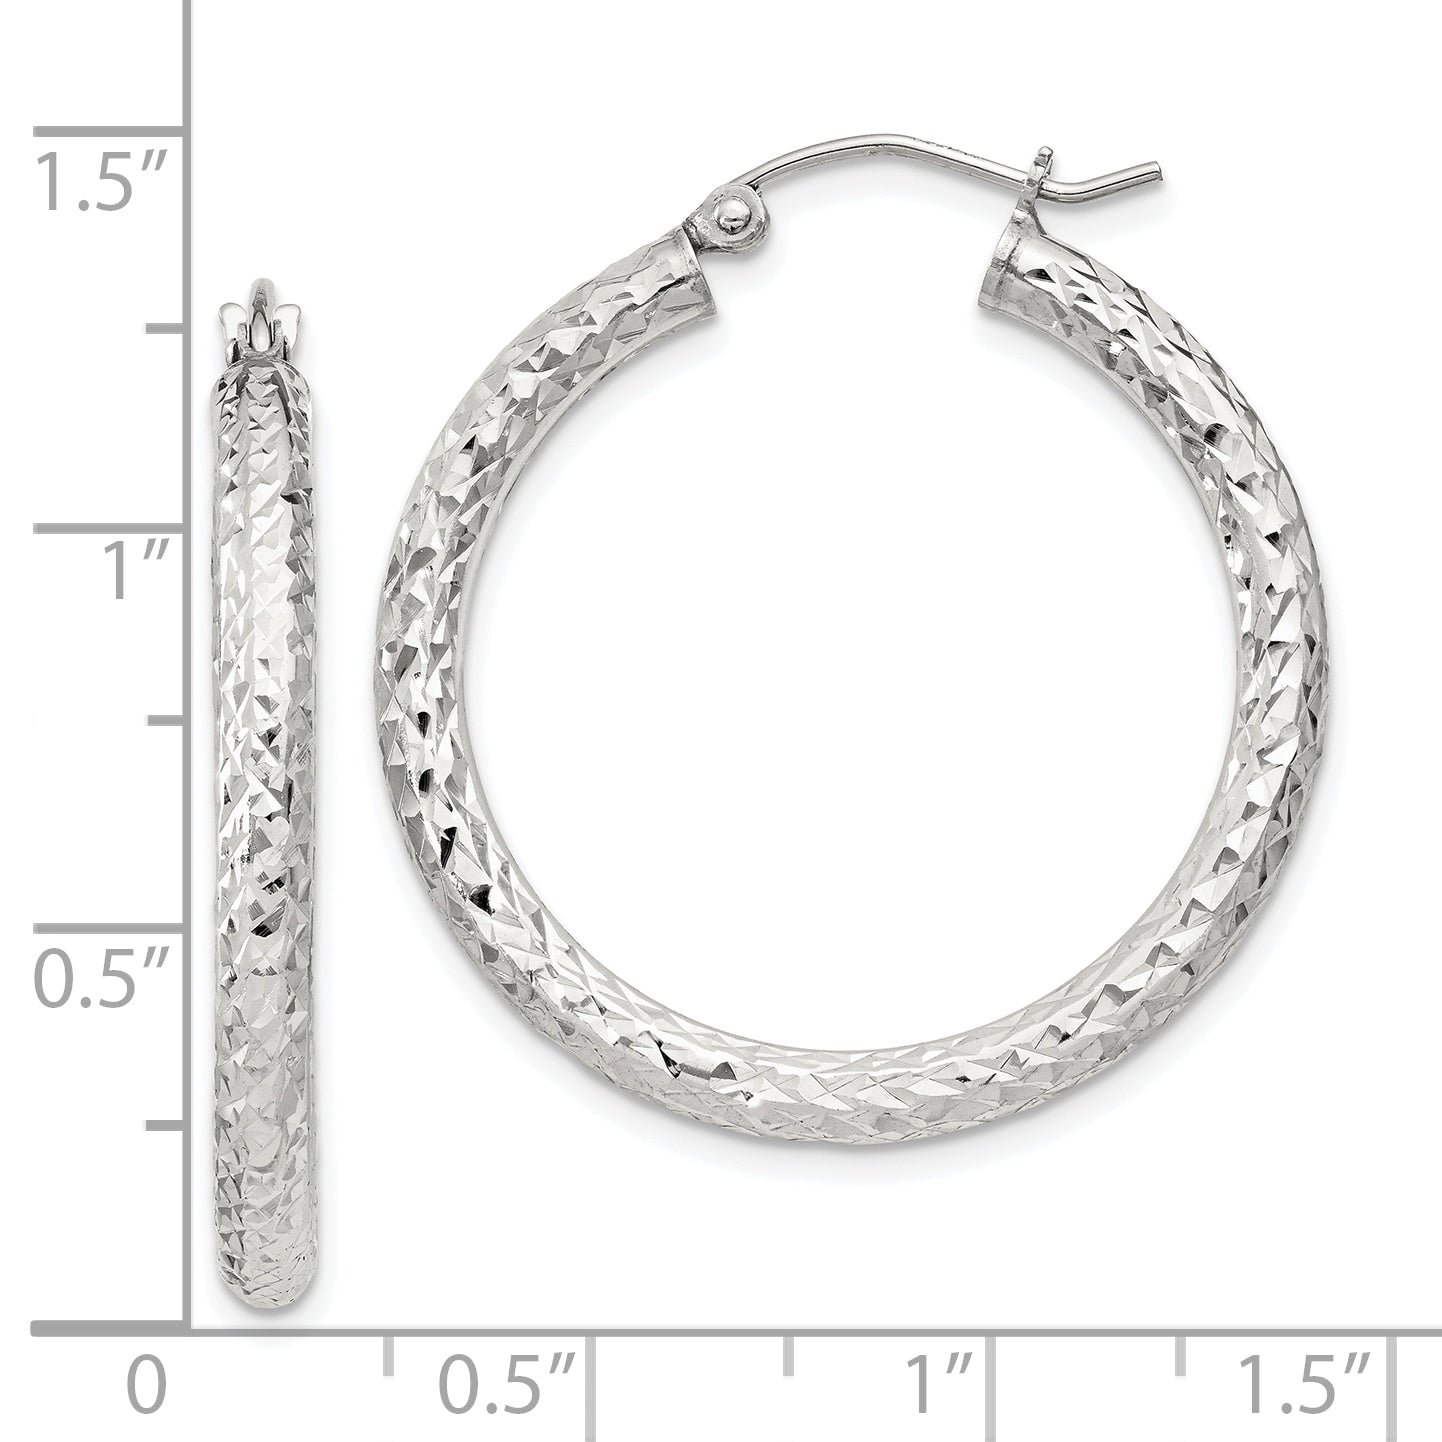 Sterling Silver D/C 3x30mm Hoop Earrings